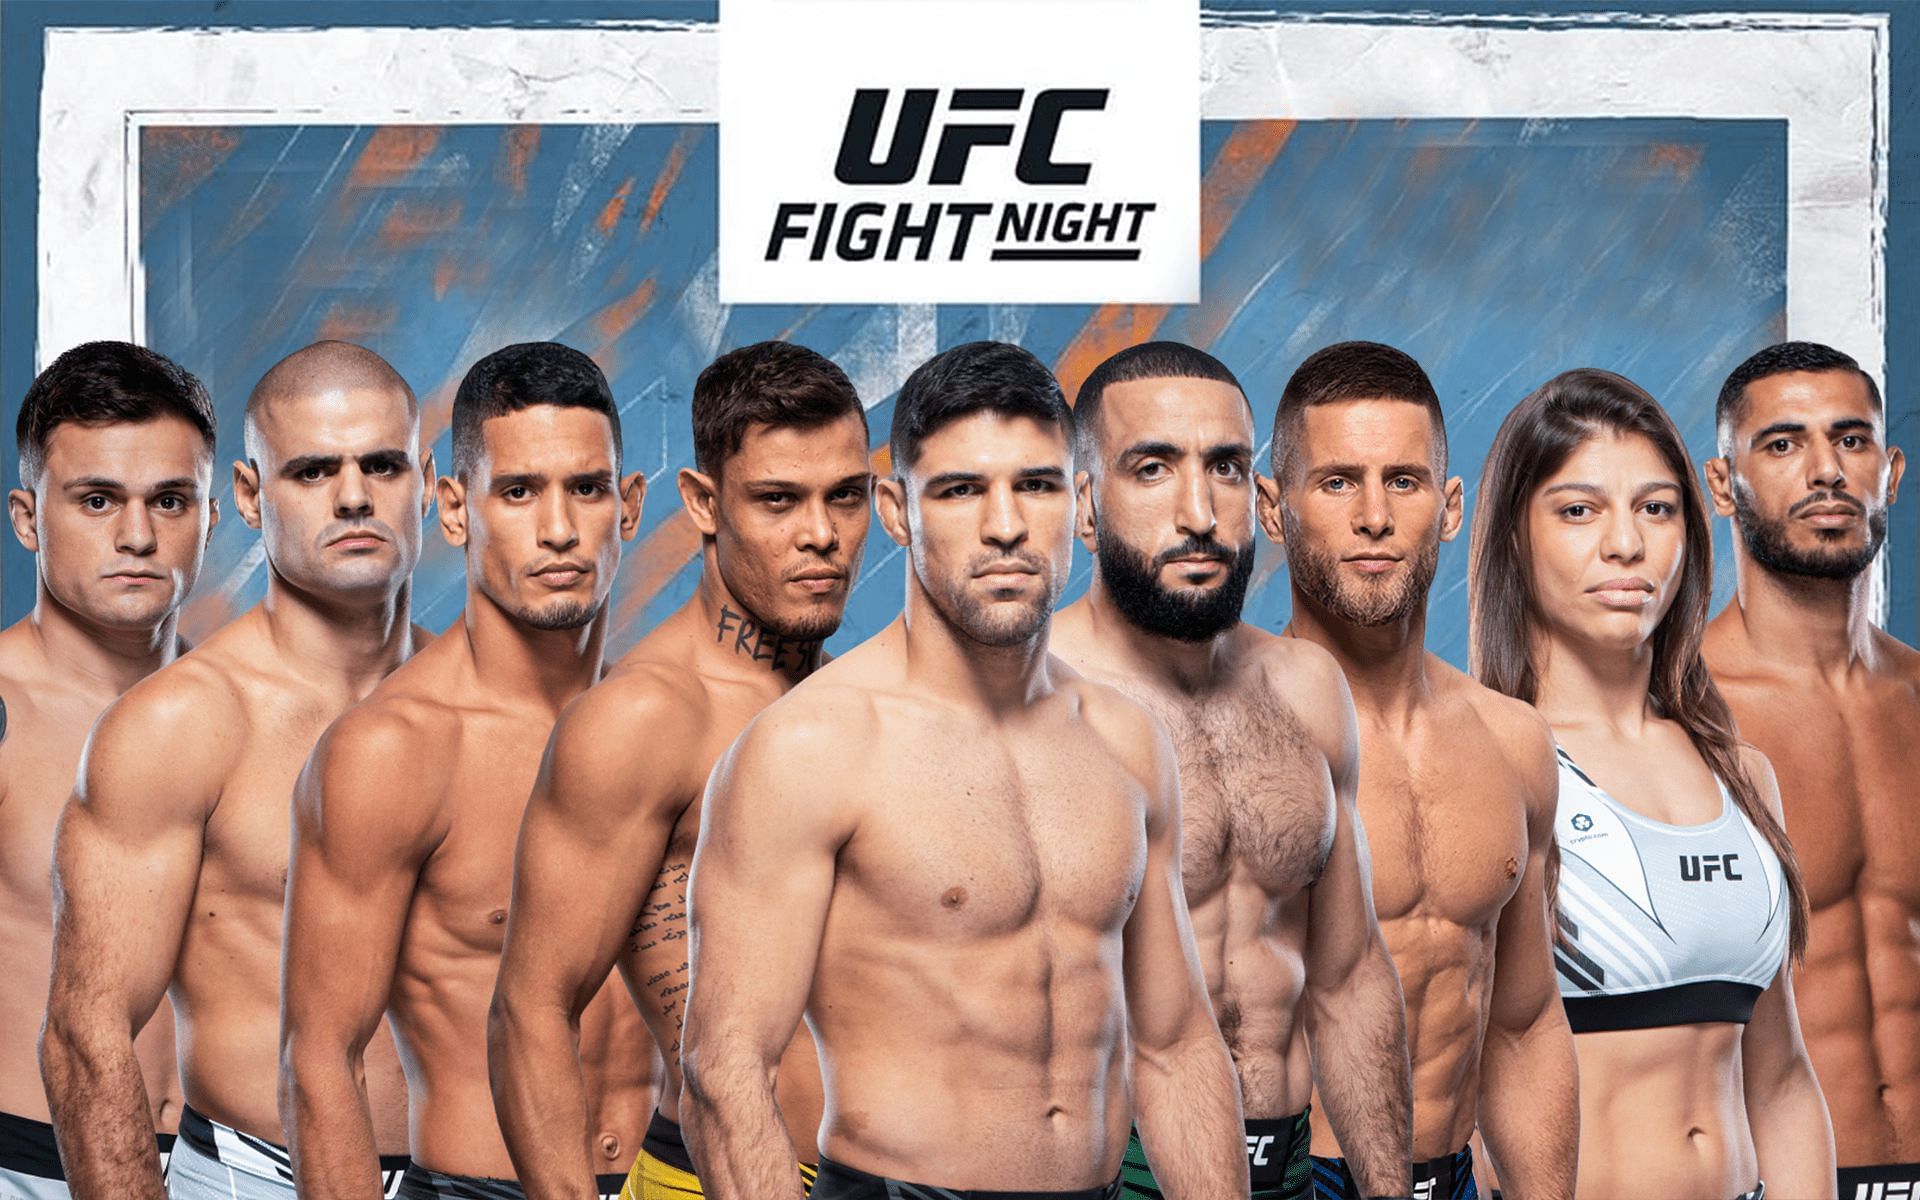 UFC Fight Night: Luque vs Muhammad took place on April 16 [Image credits: ufc.com]